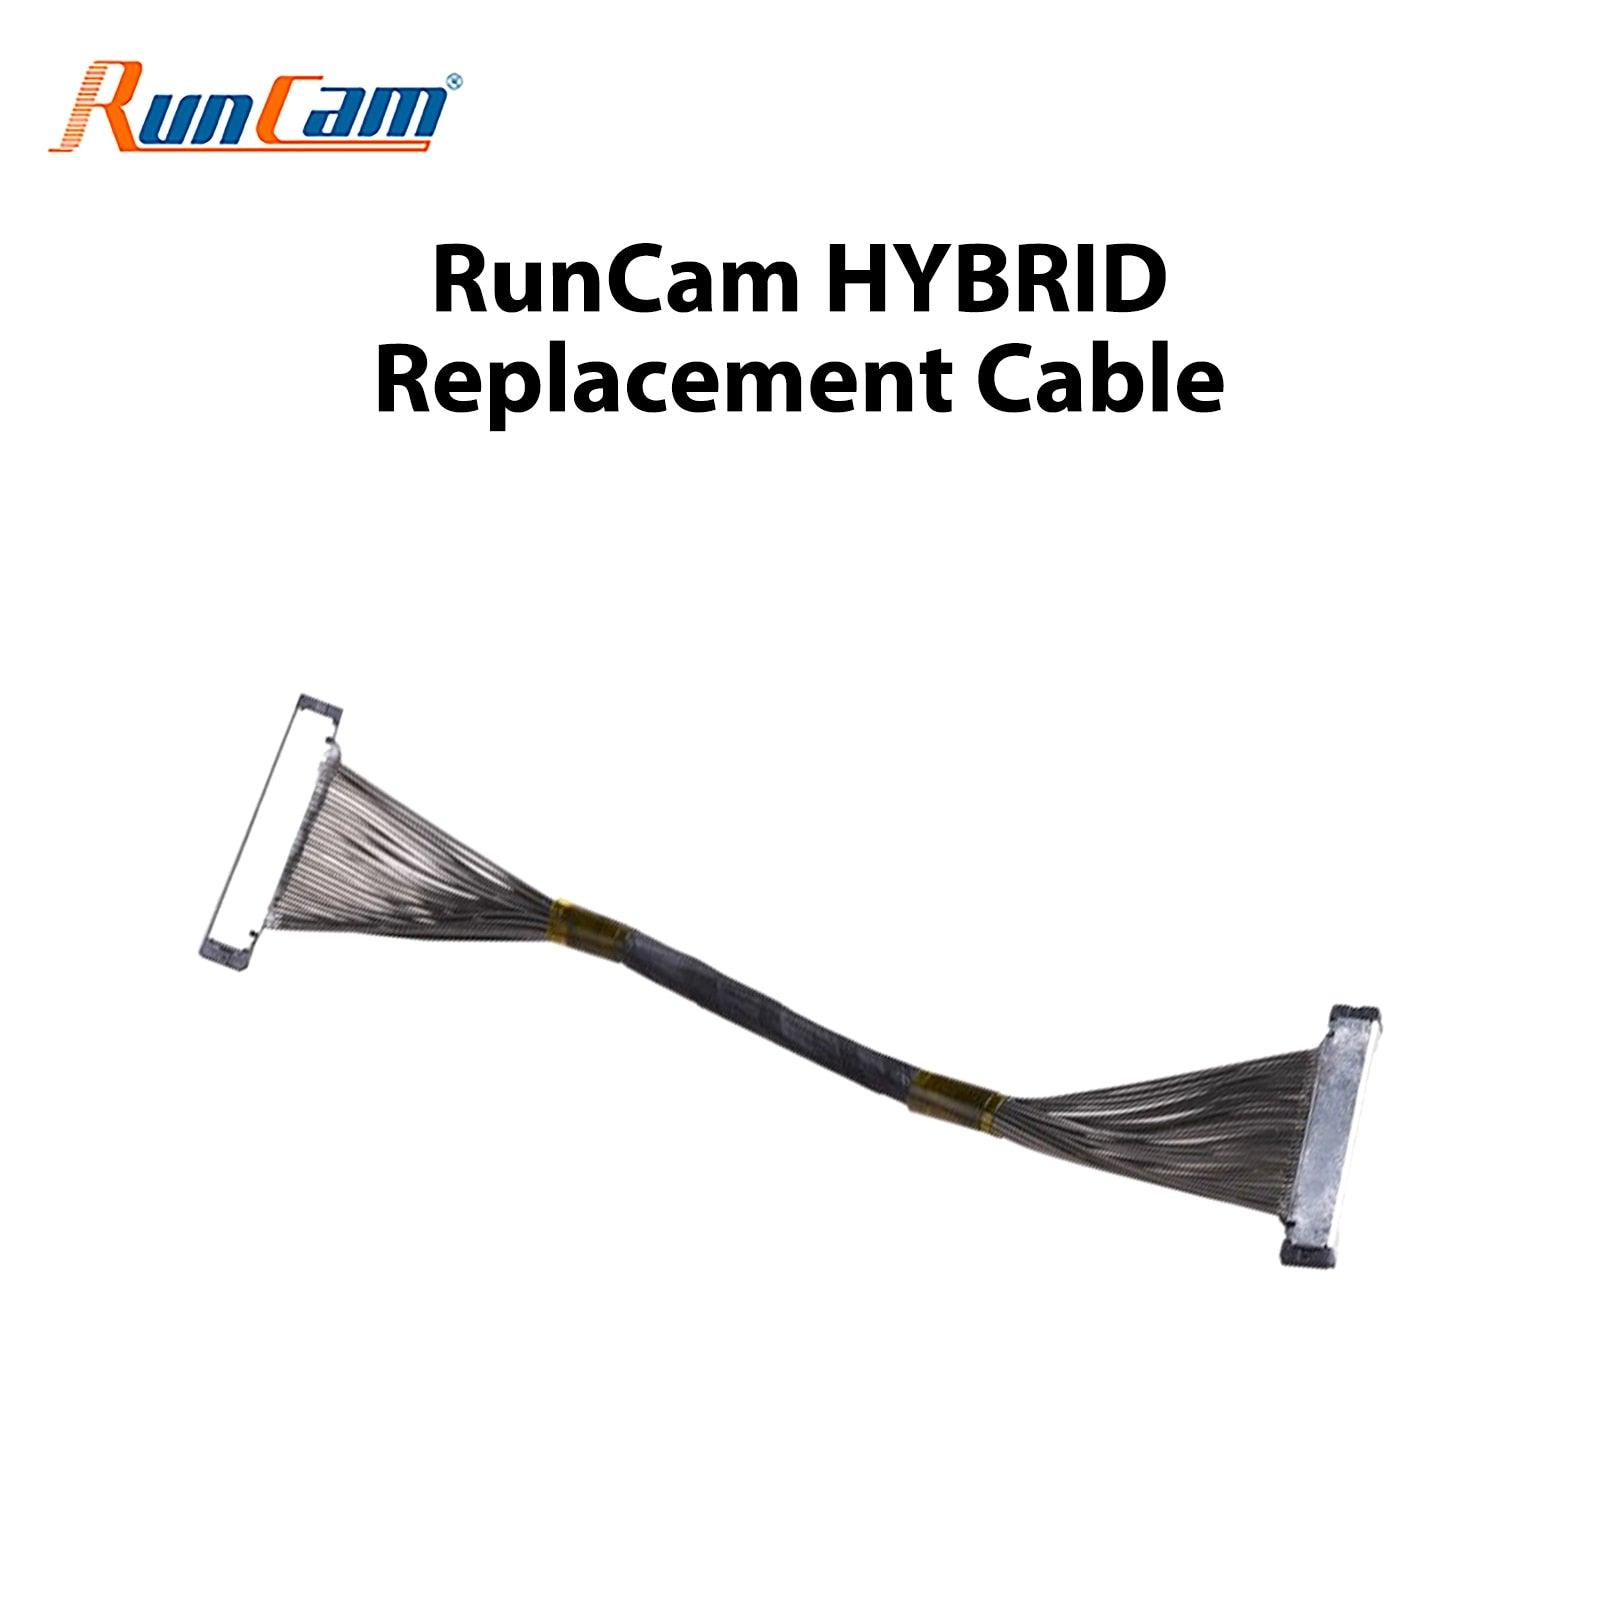 Cable for RunCam Hybrid - RCDrone